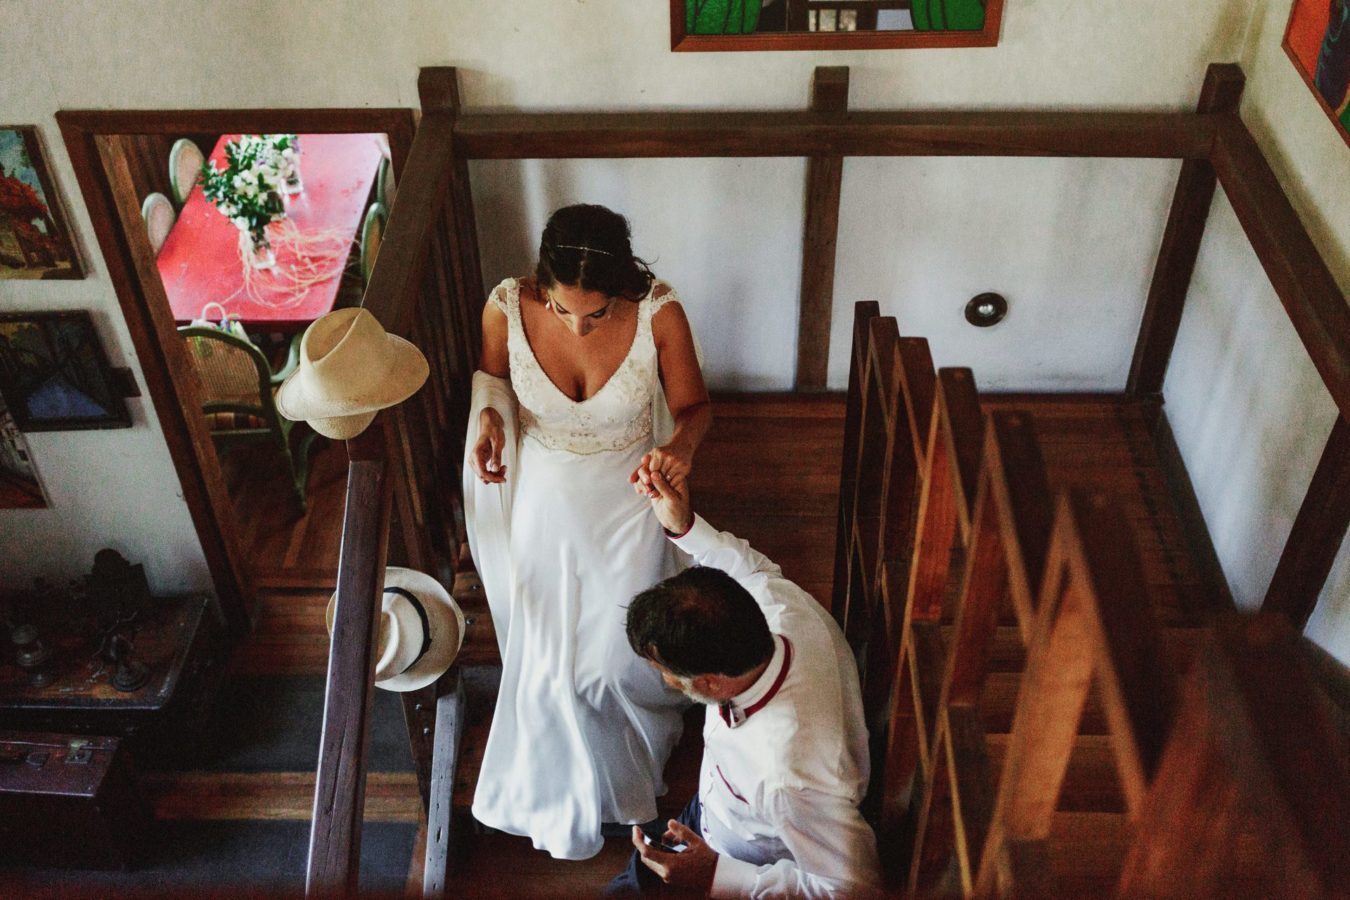 fotografia_por_andres_mejias_fotografo_de_matrimonios_wedding_photography_chile_chilean_wedding_photography_1079-1350x900